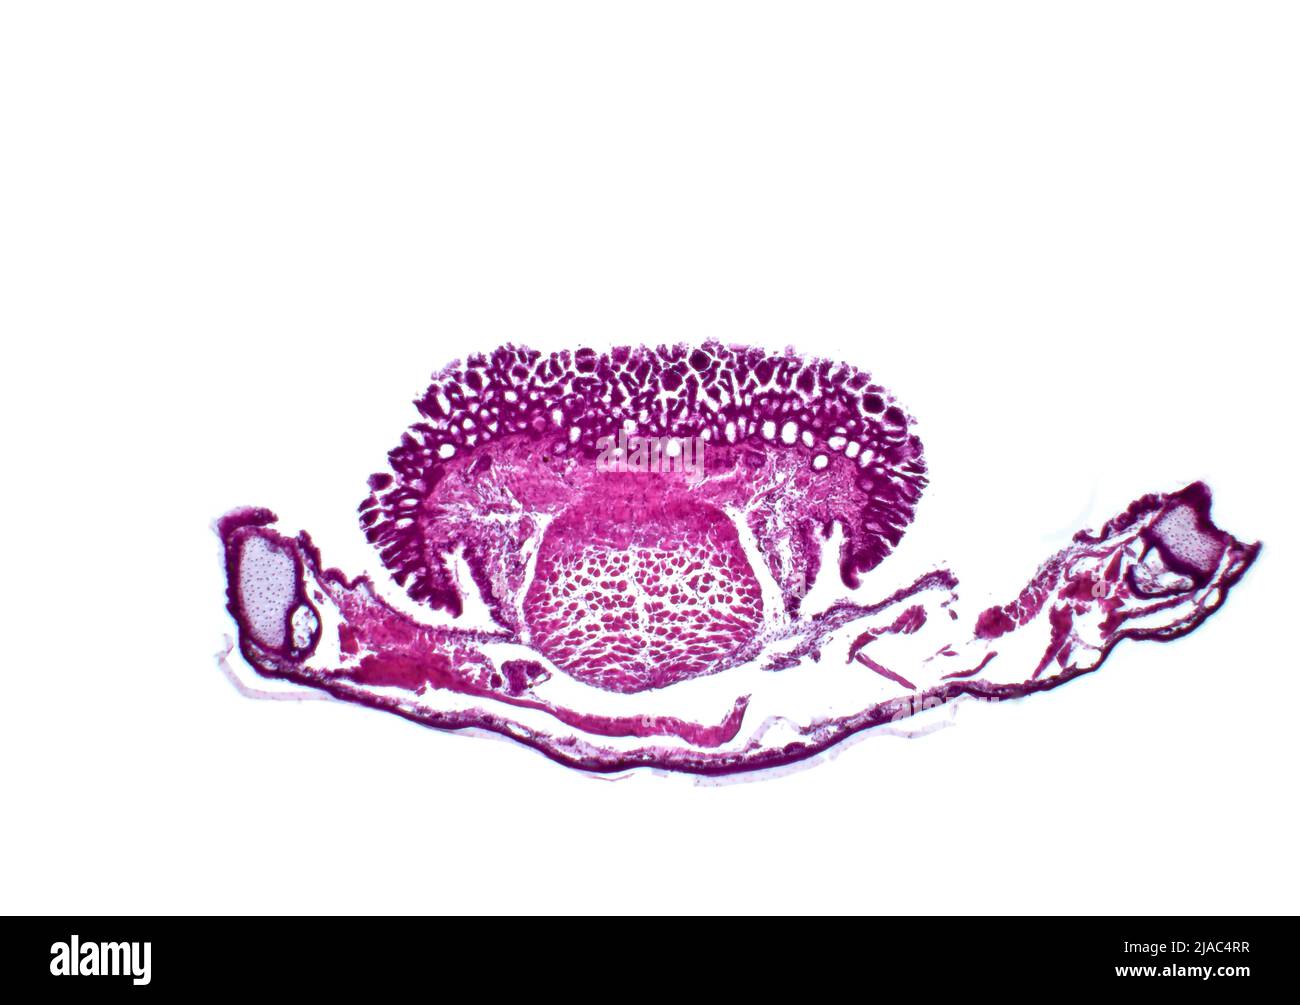 Tongue and lower jaw of a frog (Pelophylax ridibundus), light microscopy. Hematoxylin and eosin stain. Stock Photo